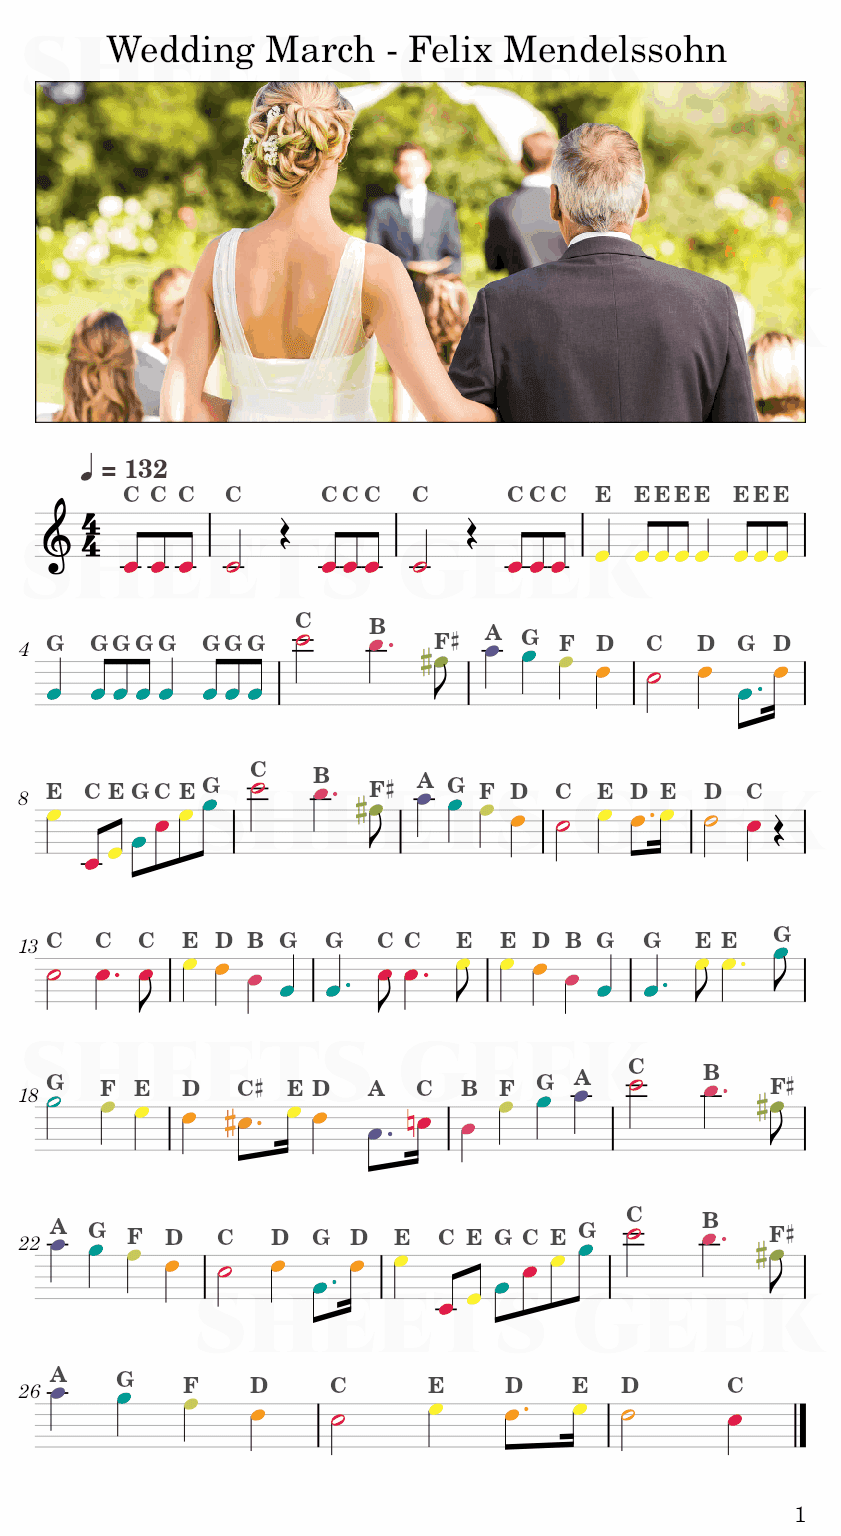 Wedding March - Felix Mendelssohn Easy Sheet Music Free for piano, keyboard, flute, violin, sax, cello page 1